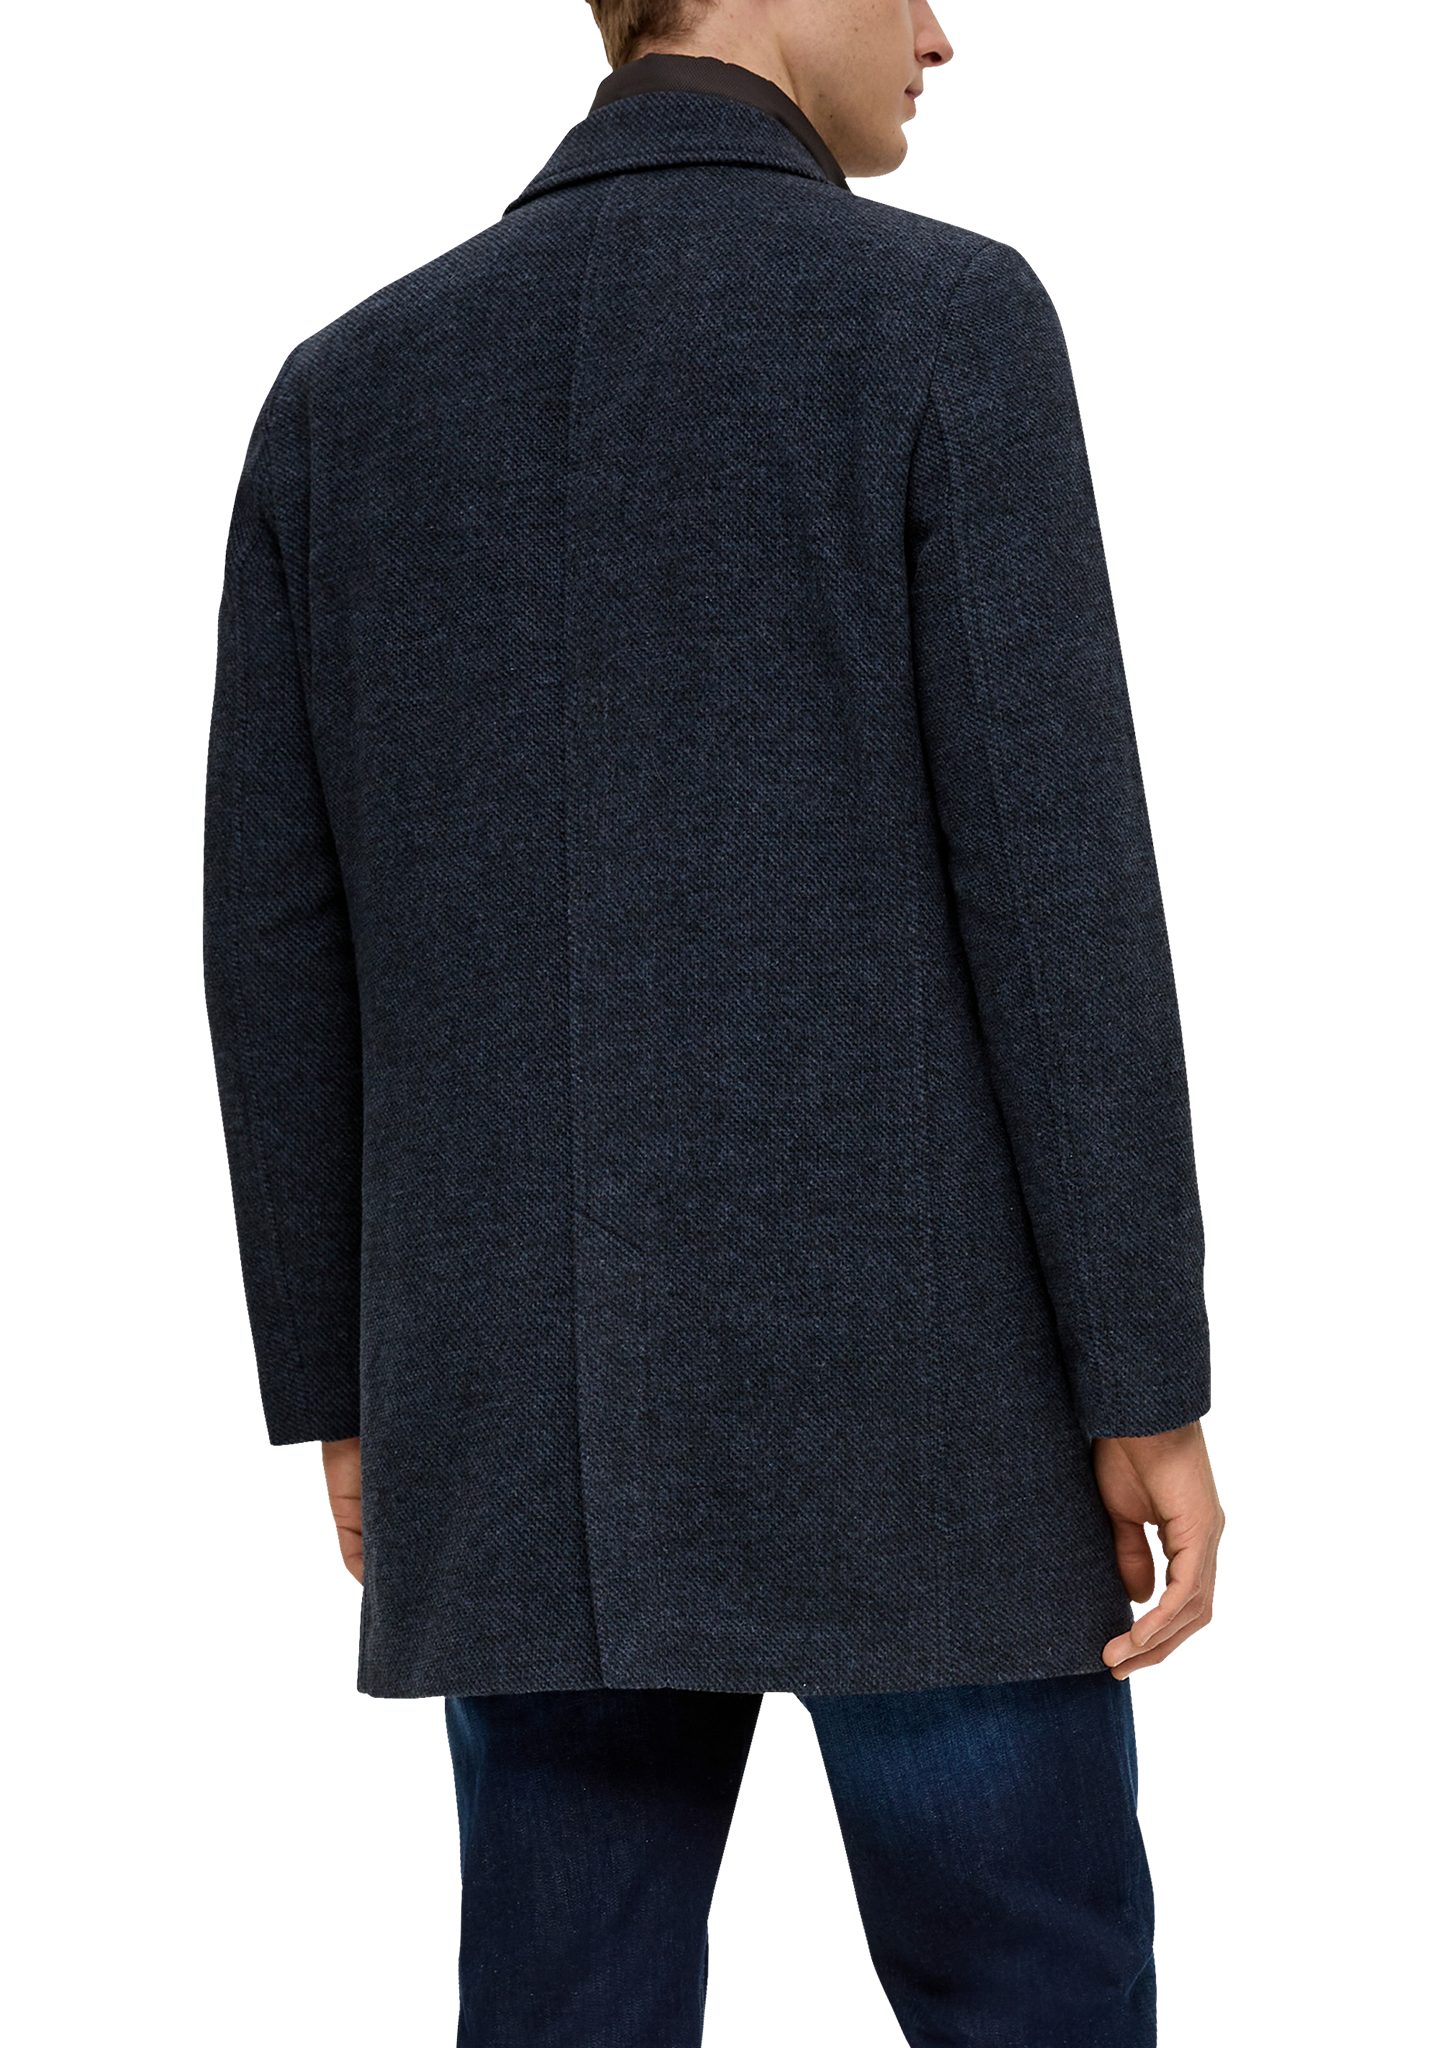 Tweed-Mantel mit herausnehmbarem herausnehmbares Langmantel navy Insert Futter s.Oliver